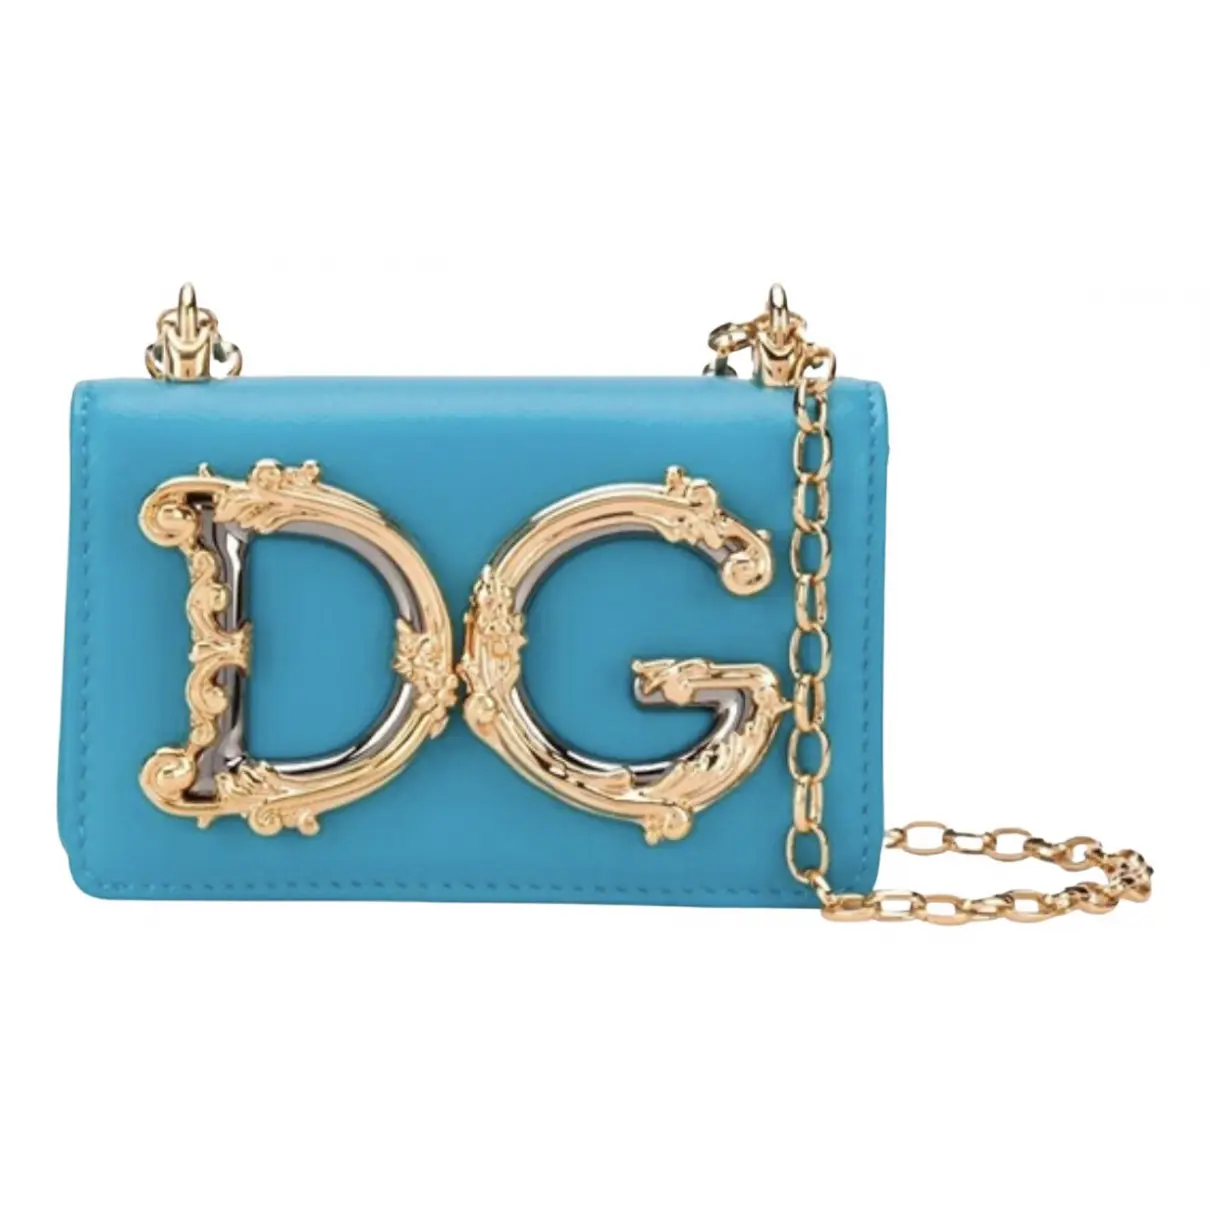 DG Girls leather handbag Dolce & Gabbana